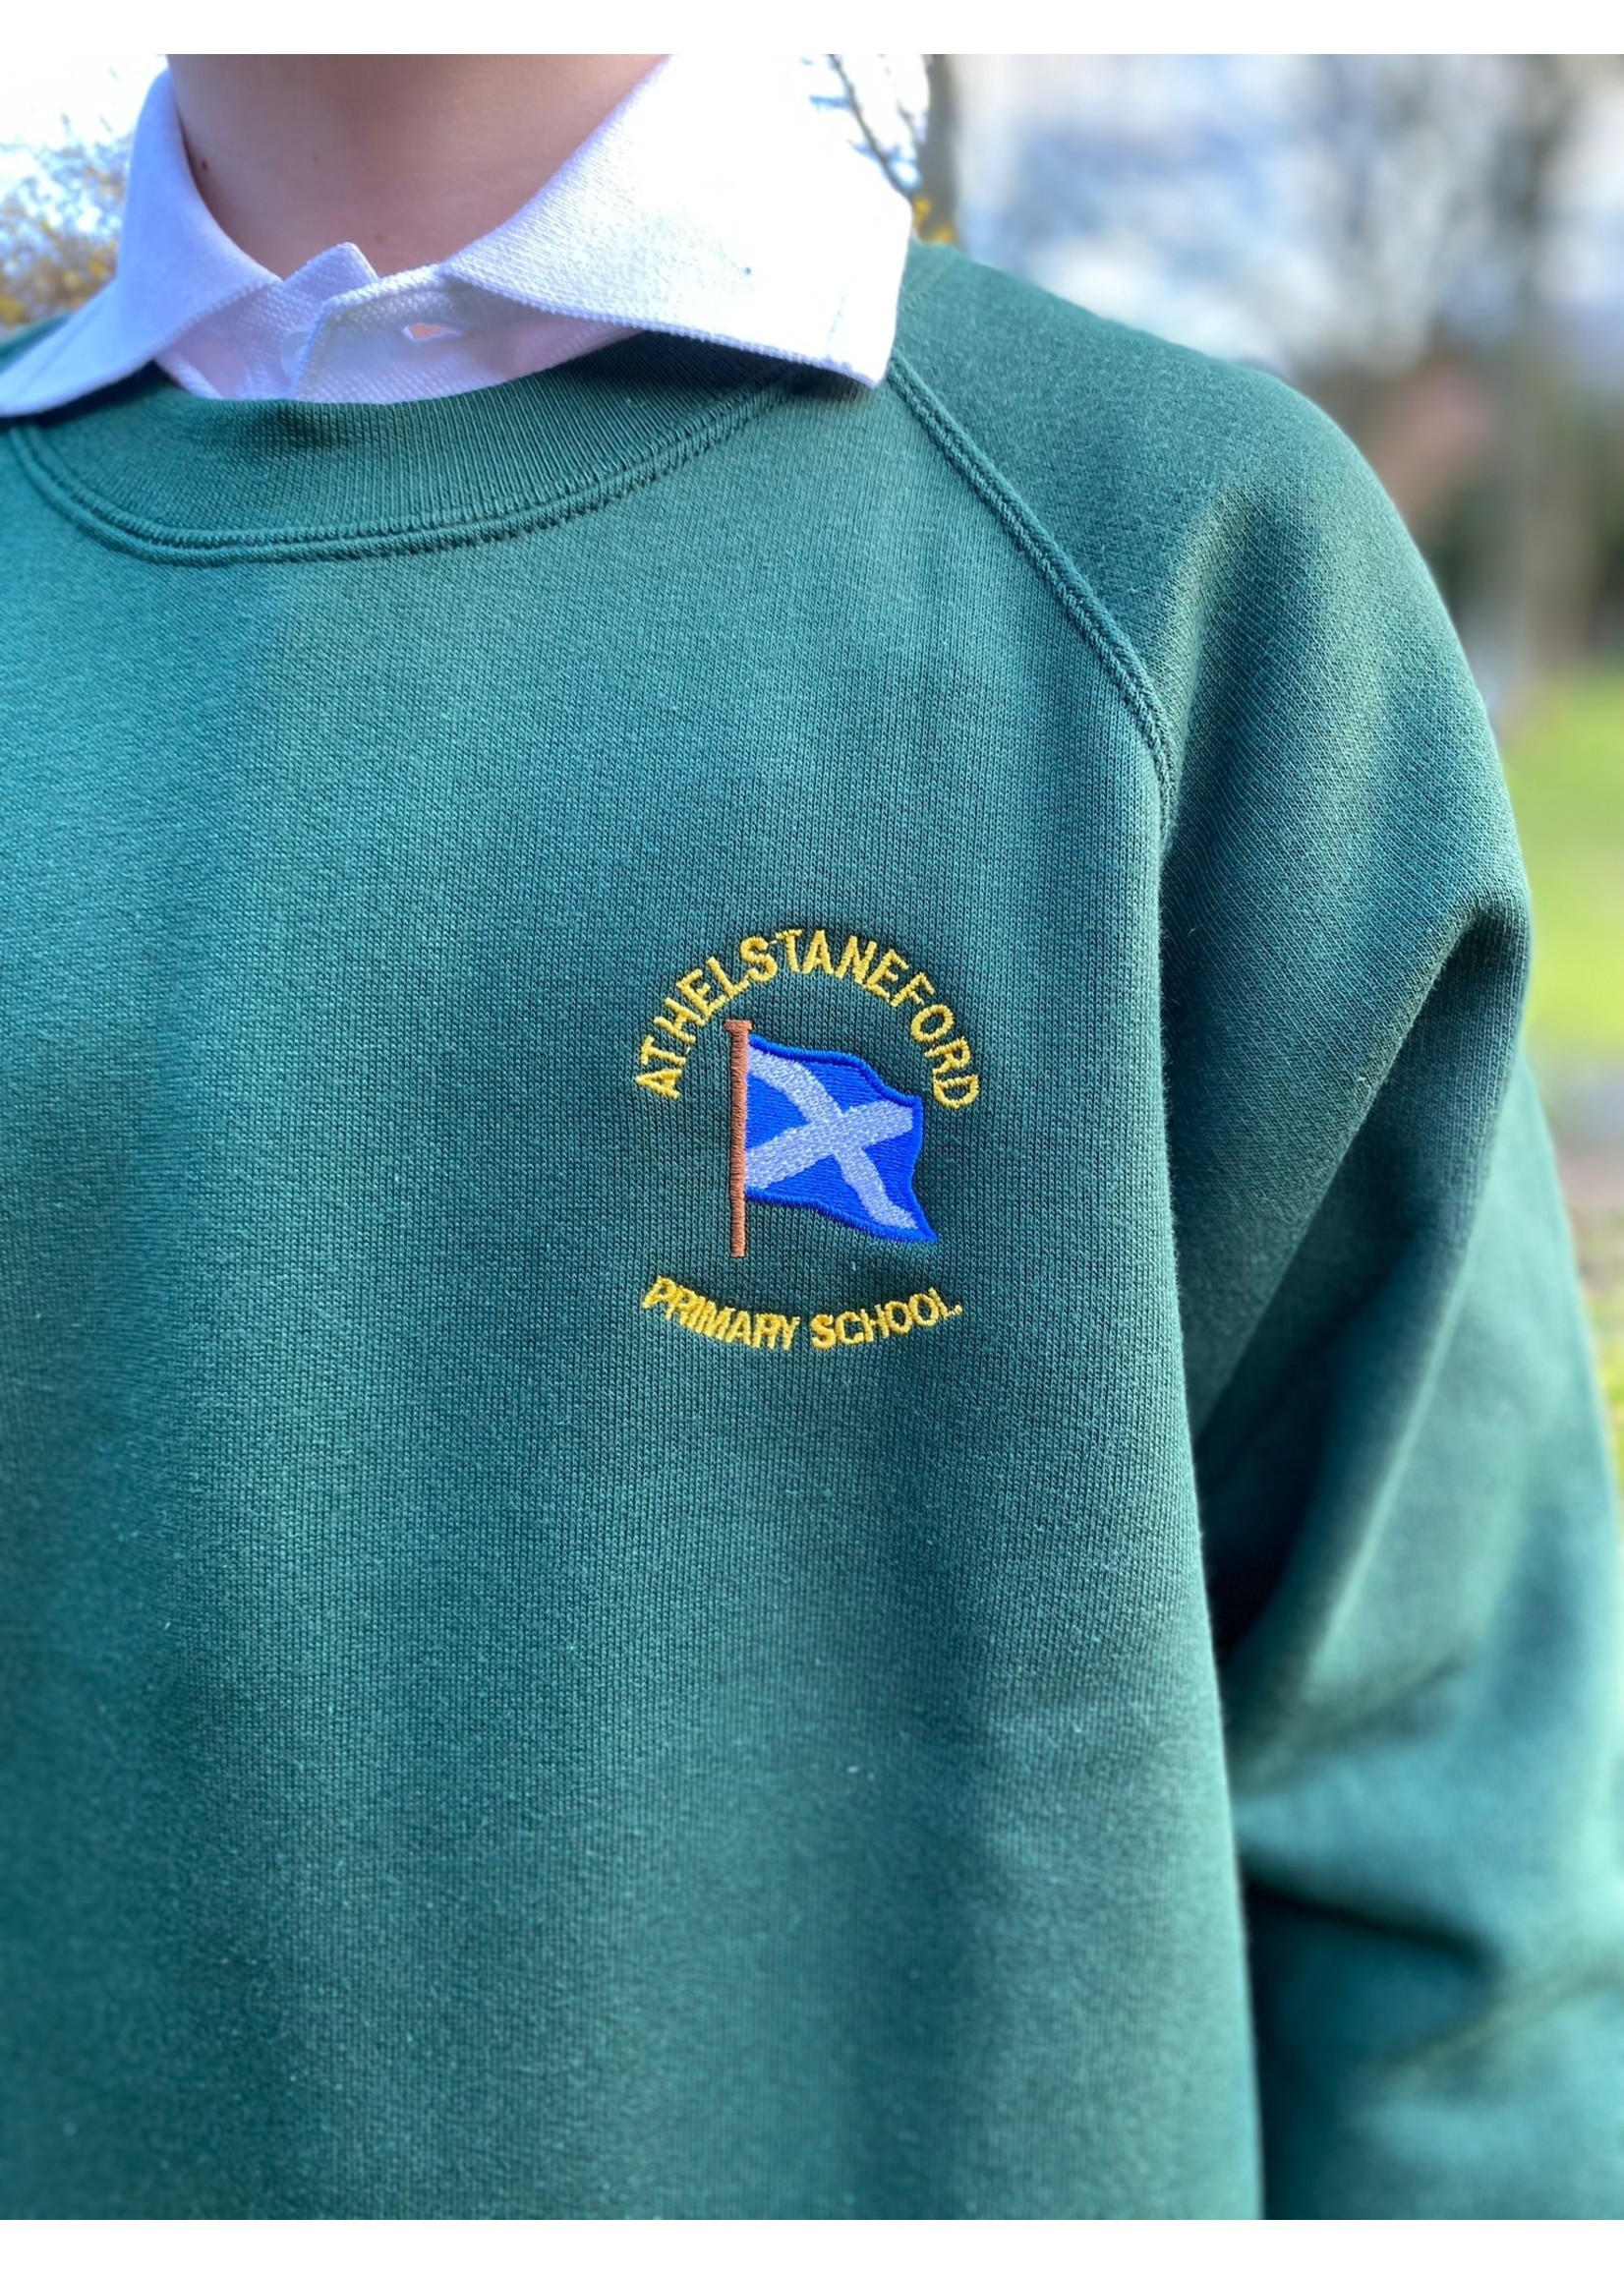 School Uniform - SWEATSHIRT - ATHELSTANEFORD PRIMARY